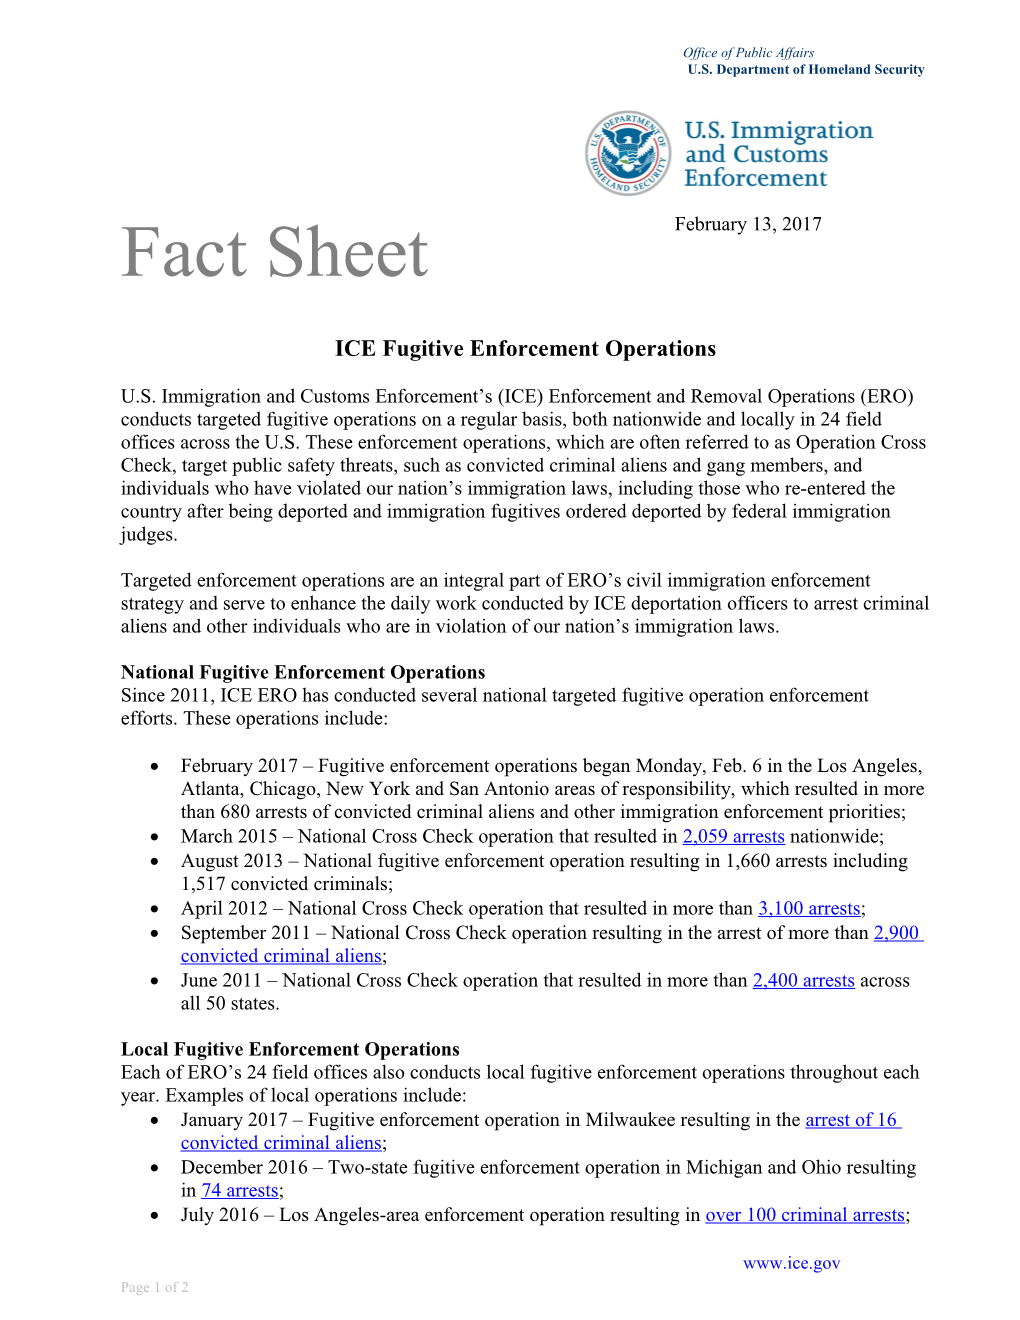 ICE Fugitive Enforcement Operations